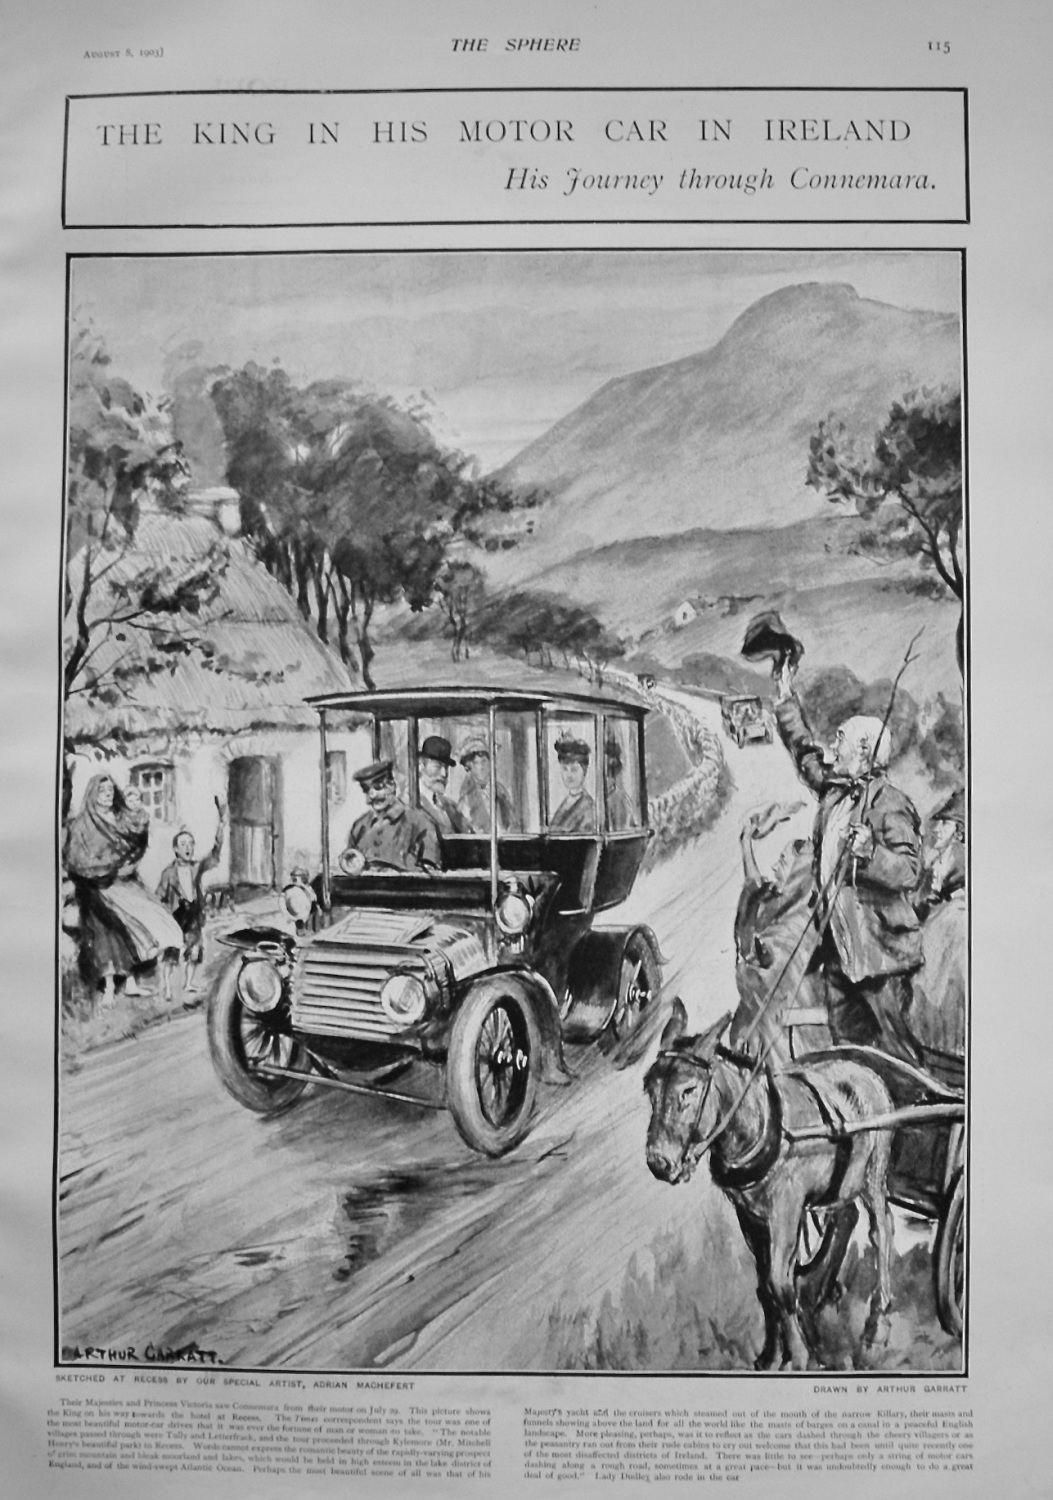 The King in his Motor Car in Ireland : His Journey through Connemara. 1903